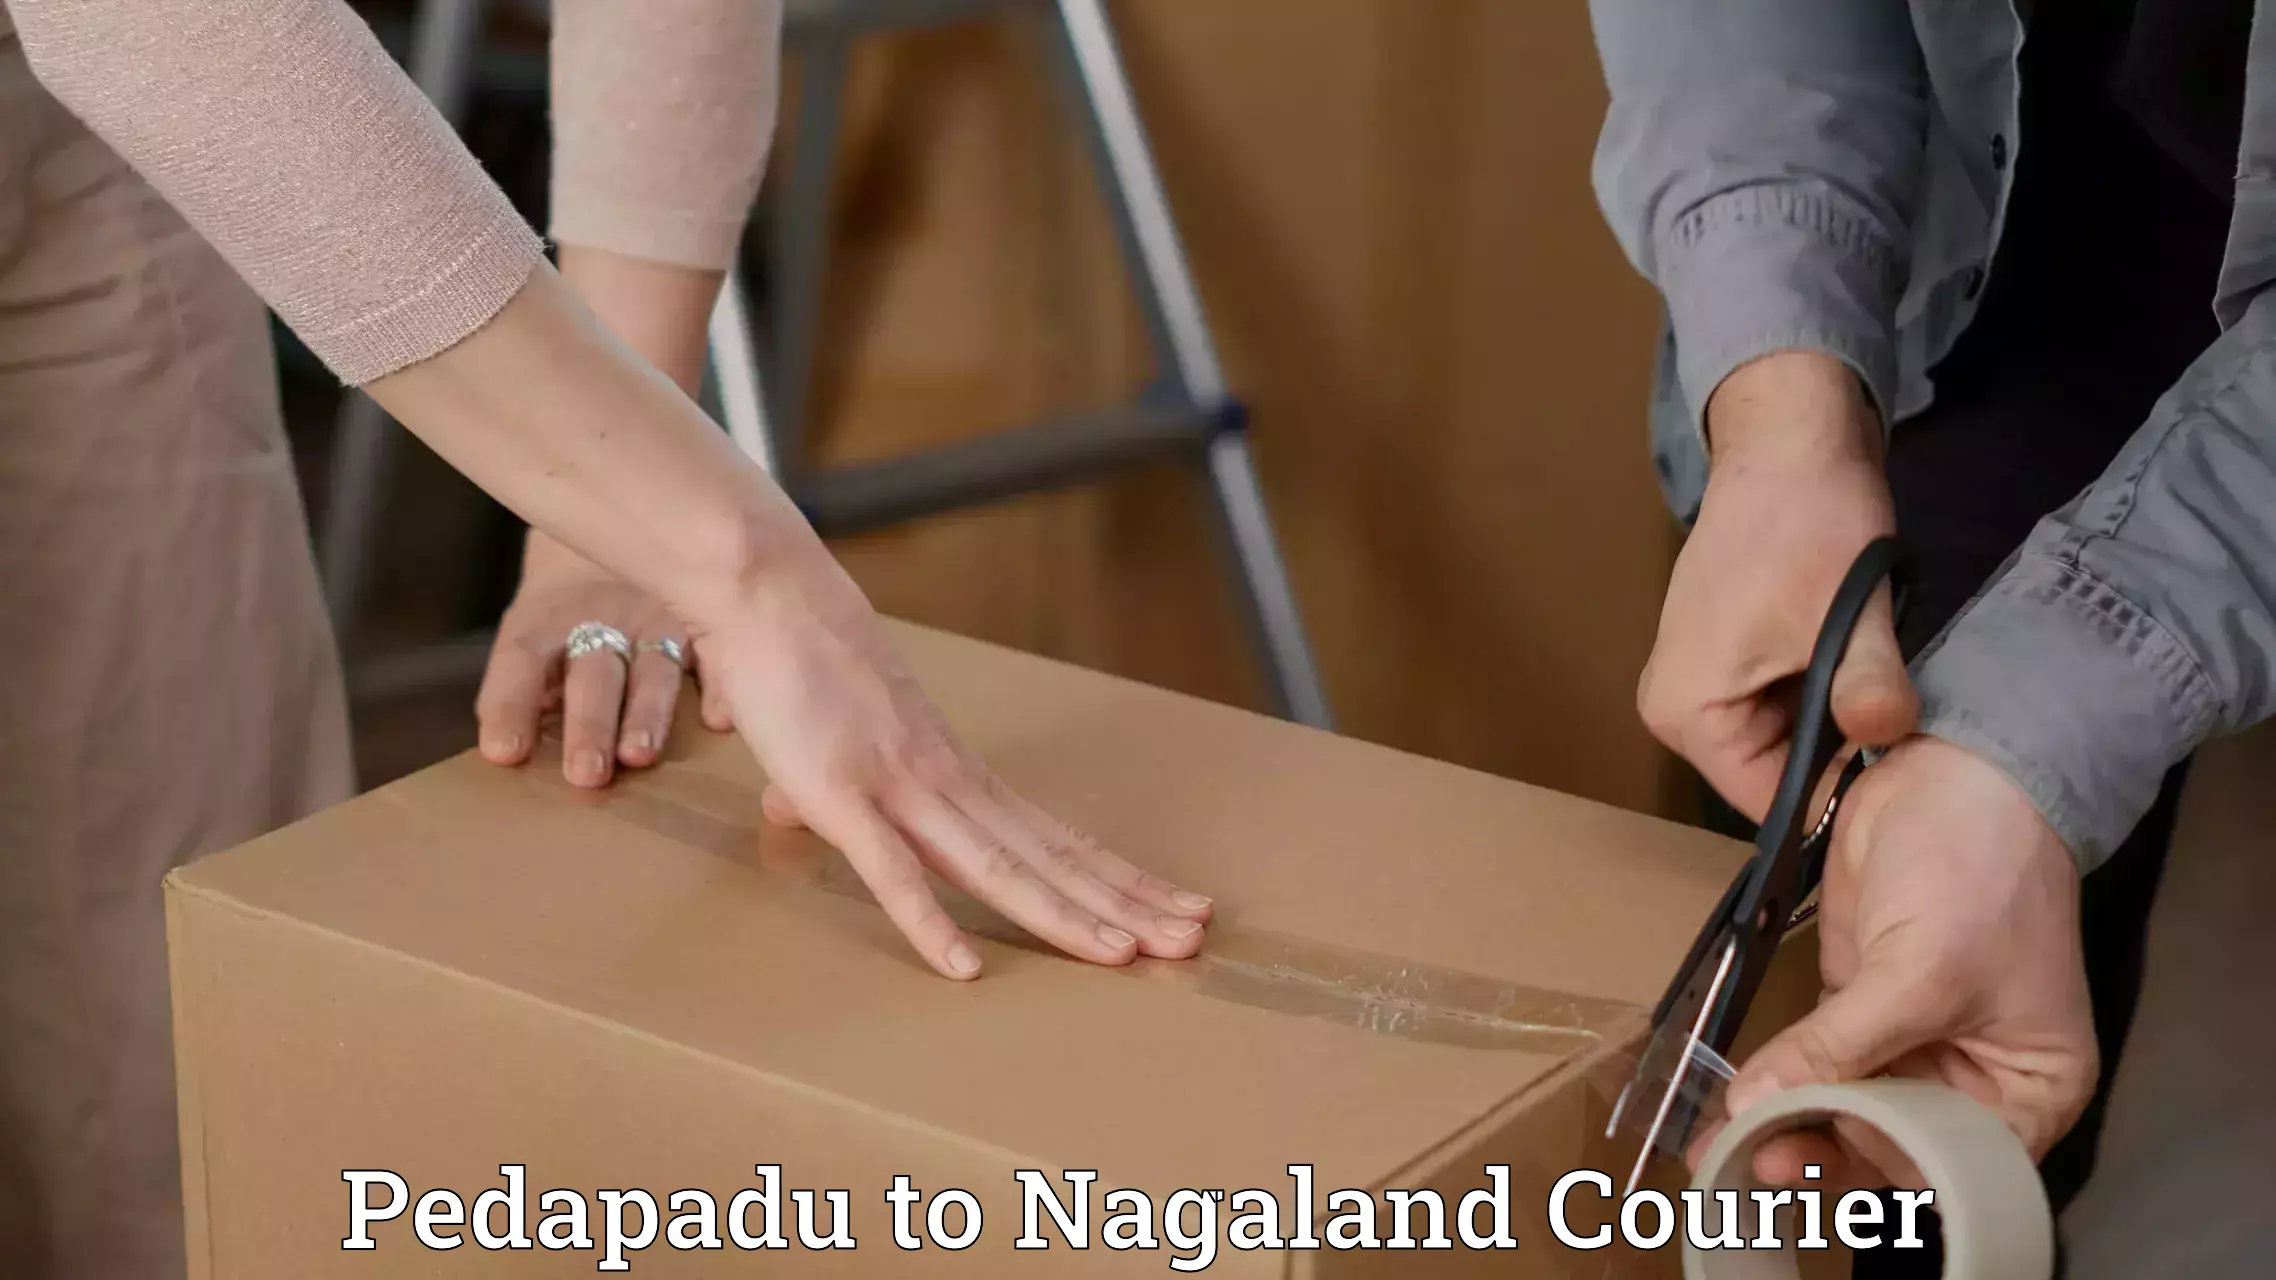 Efficient order fulfillment Pedapadu to Nagaland